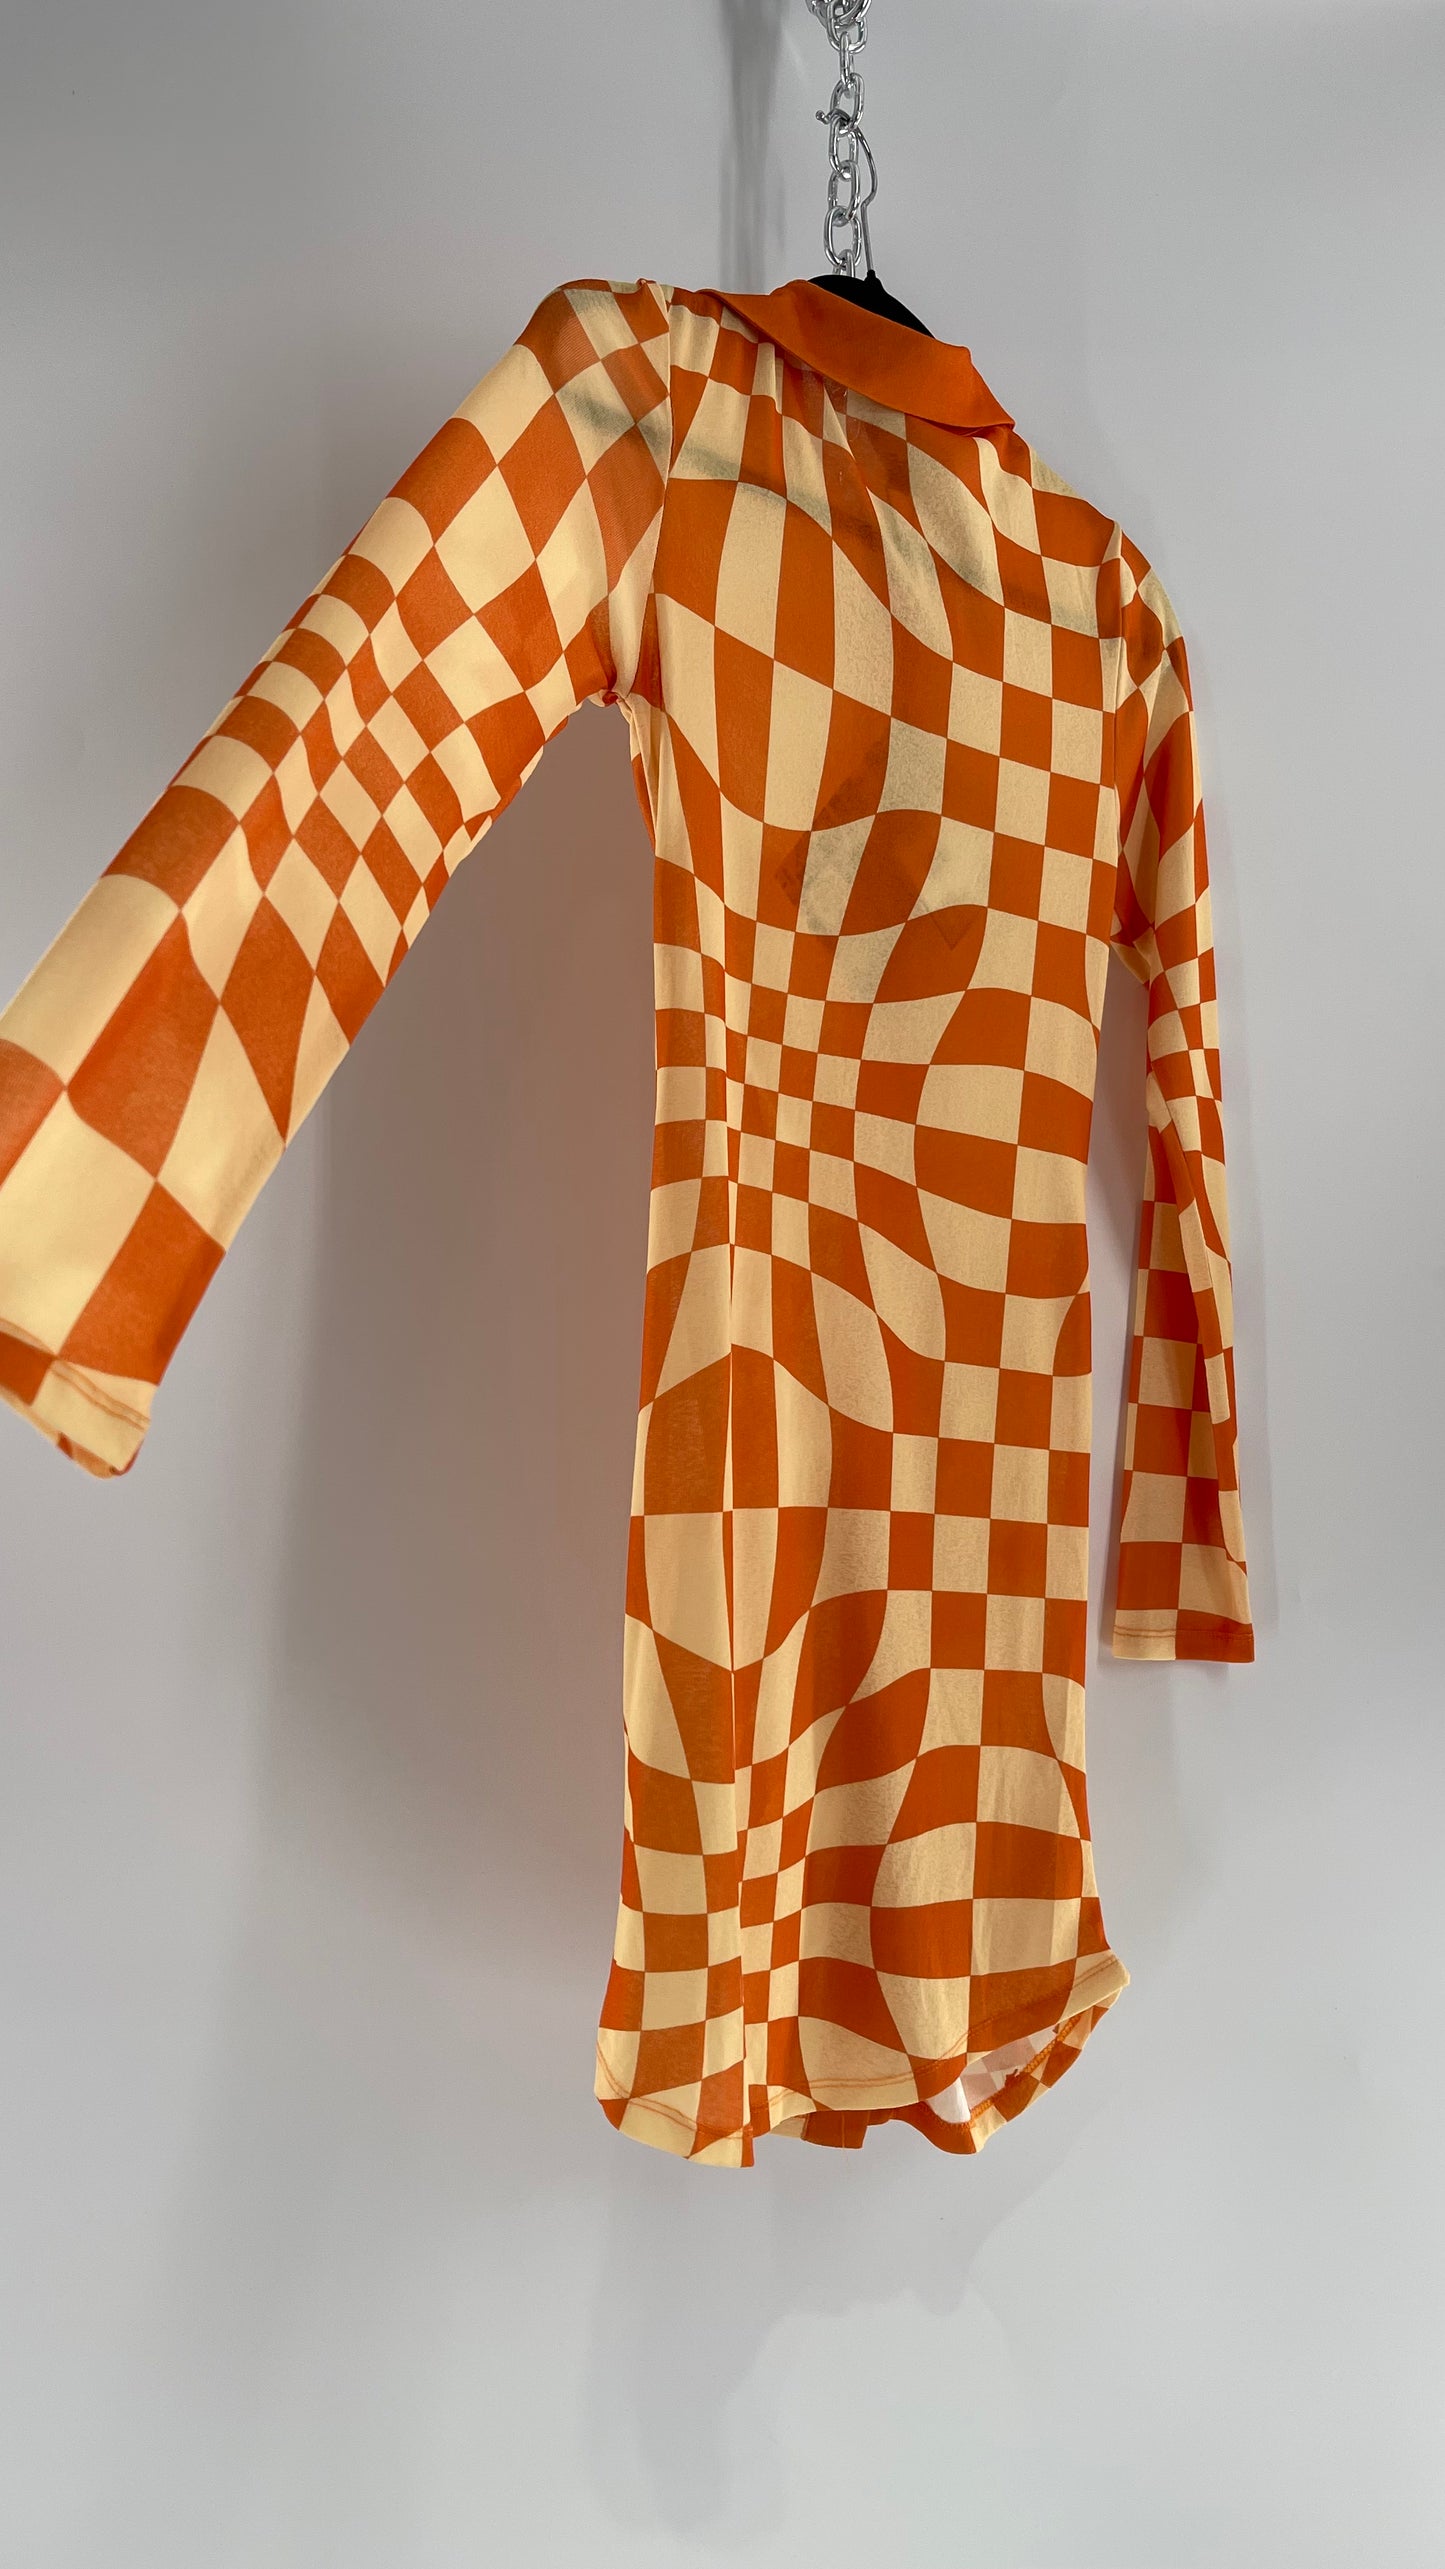 NGOrder Checkerprint Yellow/Orange Collared Buttonfront Dress (8)